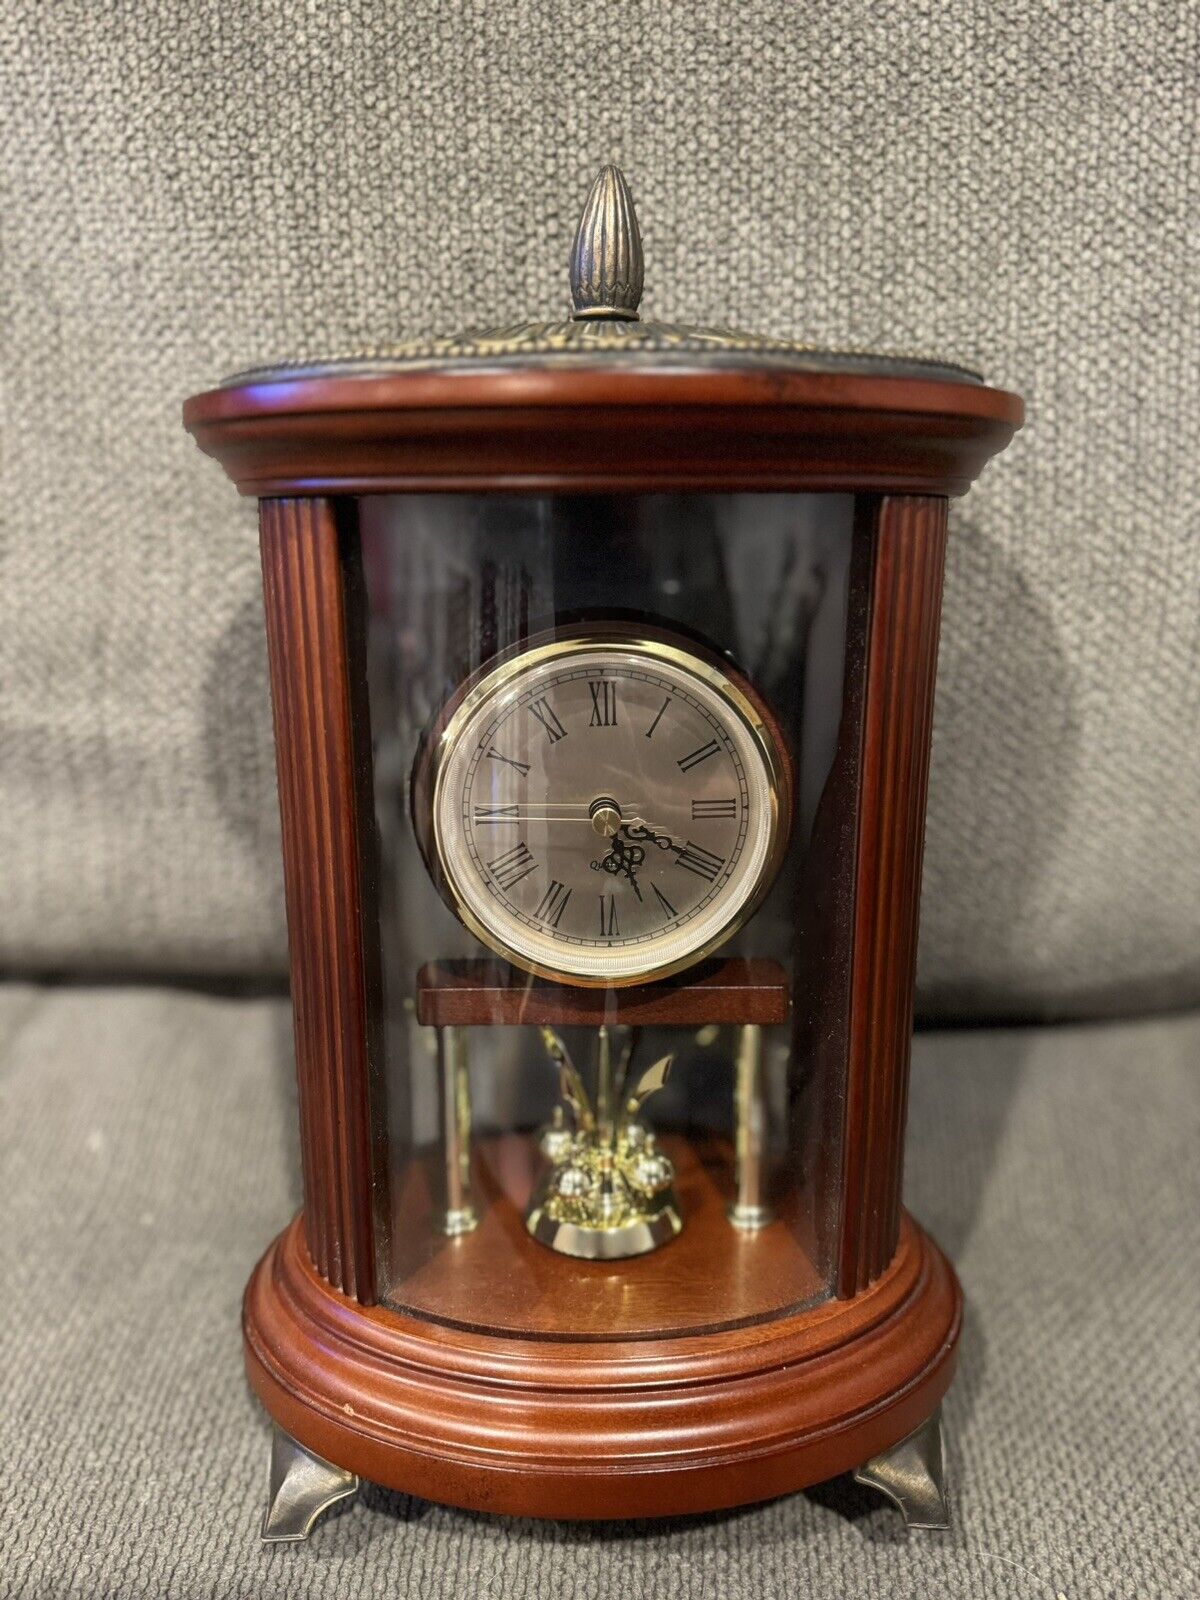 VTG ,2004 ,Bombay Mantle,Desk Cherry Wood Torsion Clock (Anniversary Clock)Mint